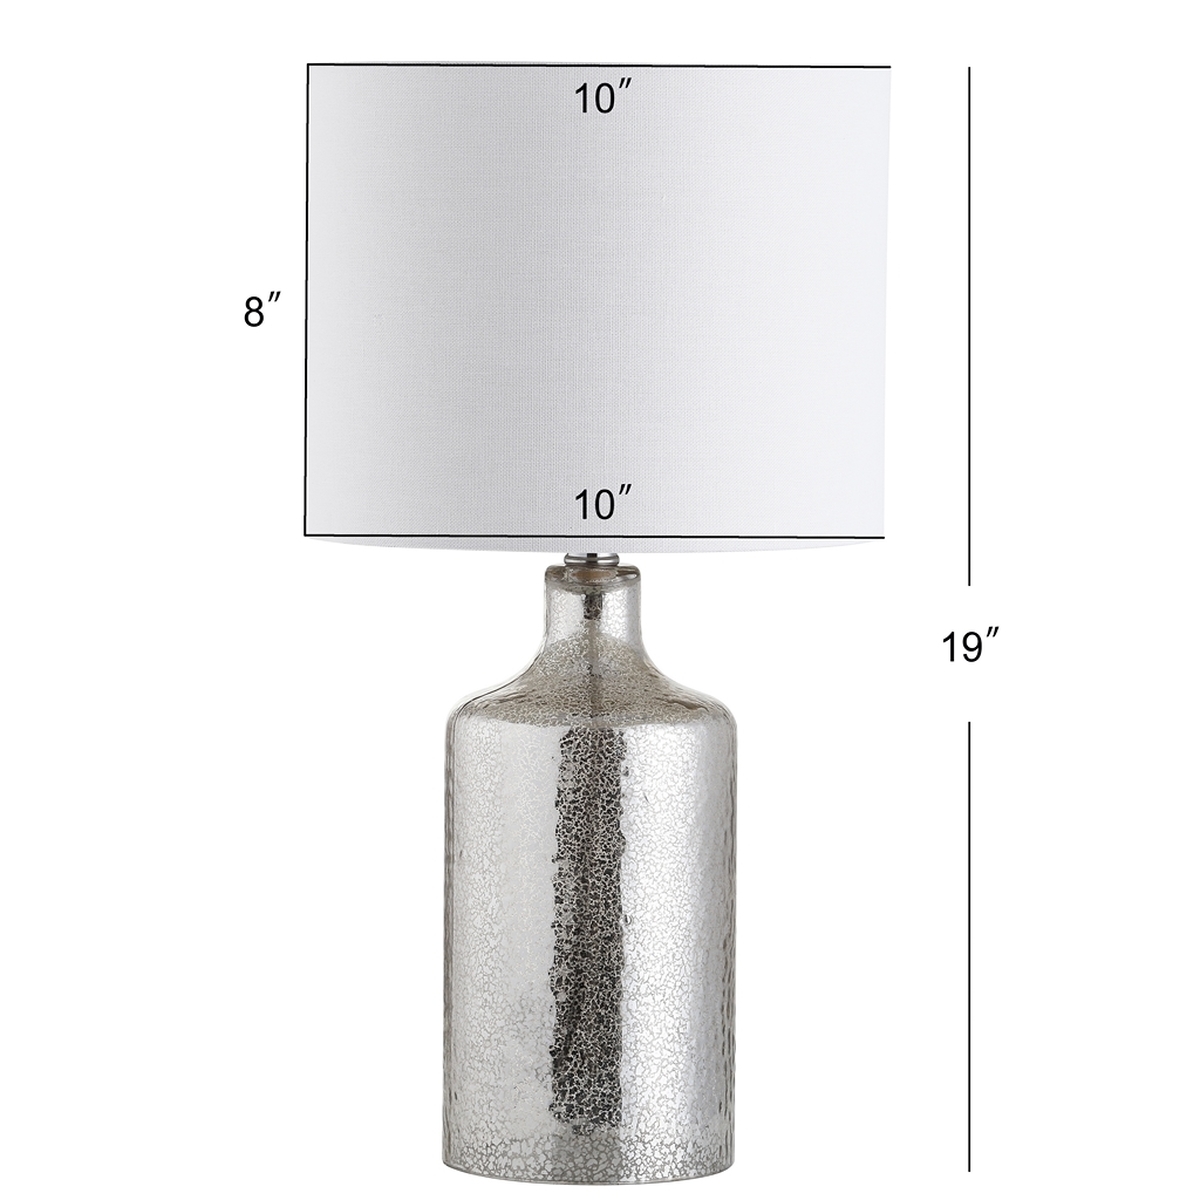 Danaris Table Lamp - Silver/Ivory - Arlo Home - Image 3